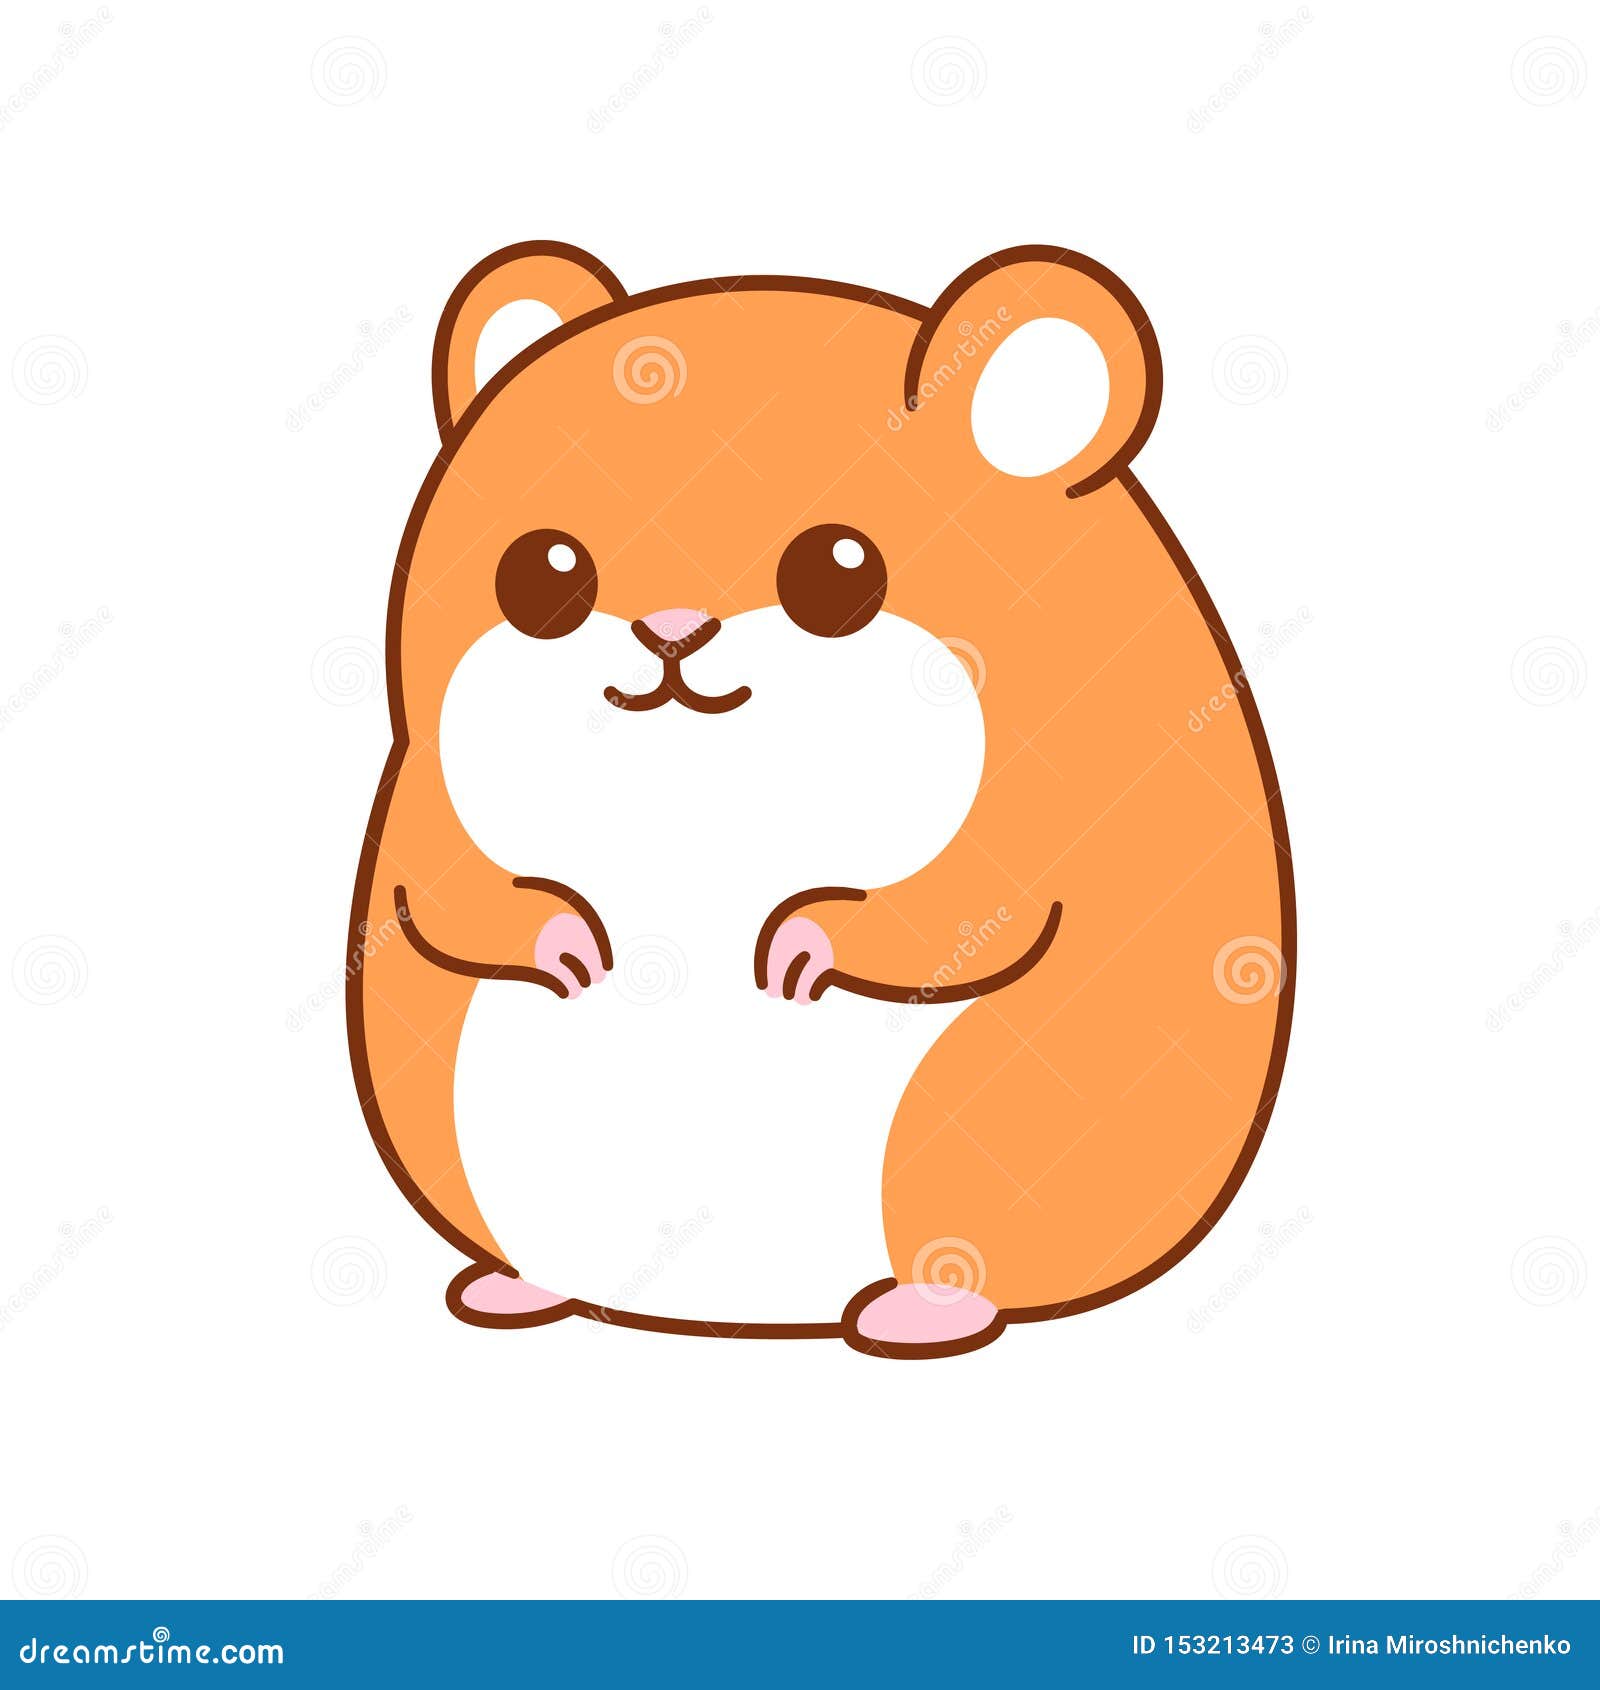 Cute cartoon hamster stock vector. Illustration of comic - 153213473